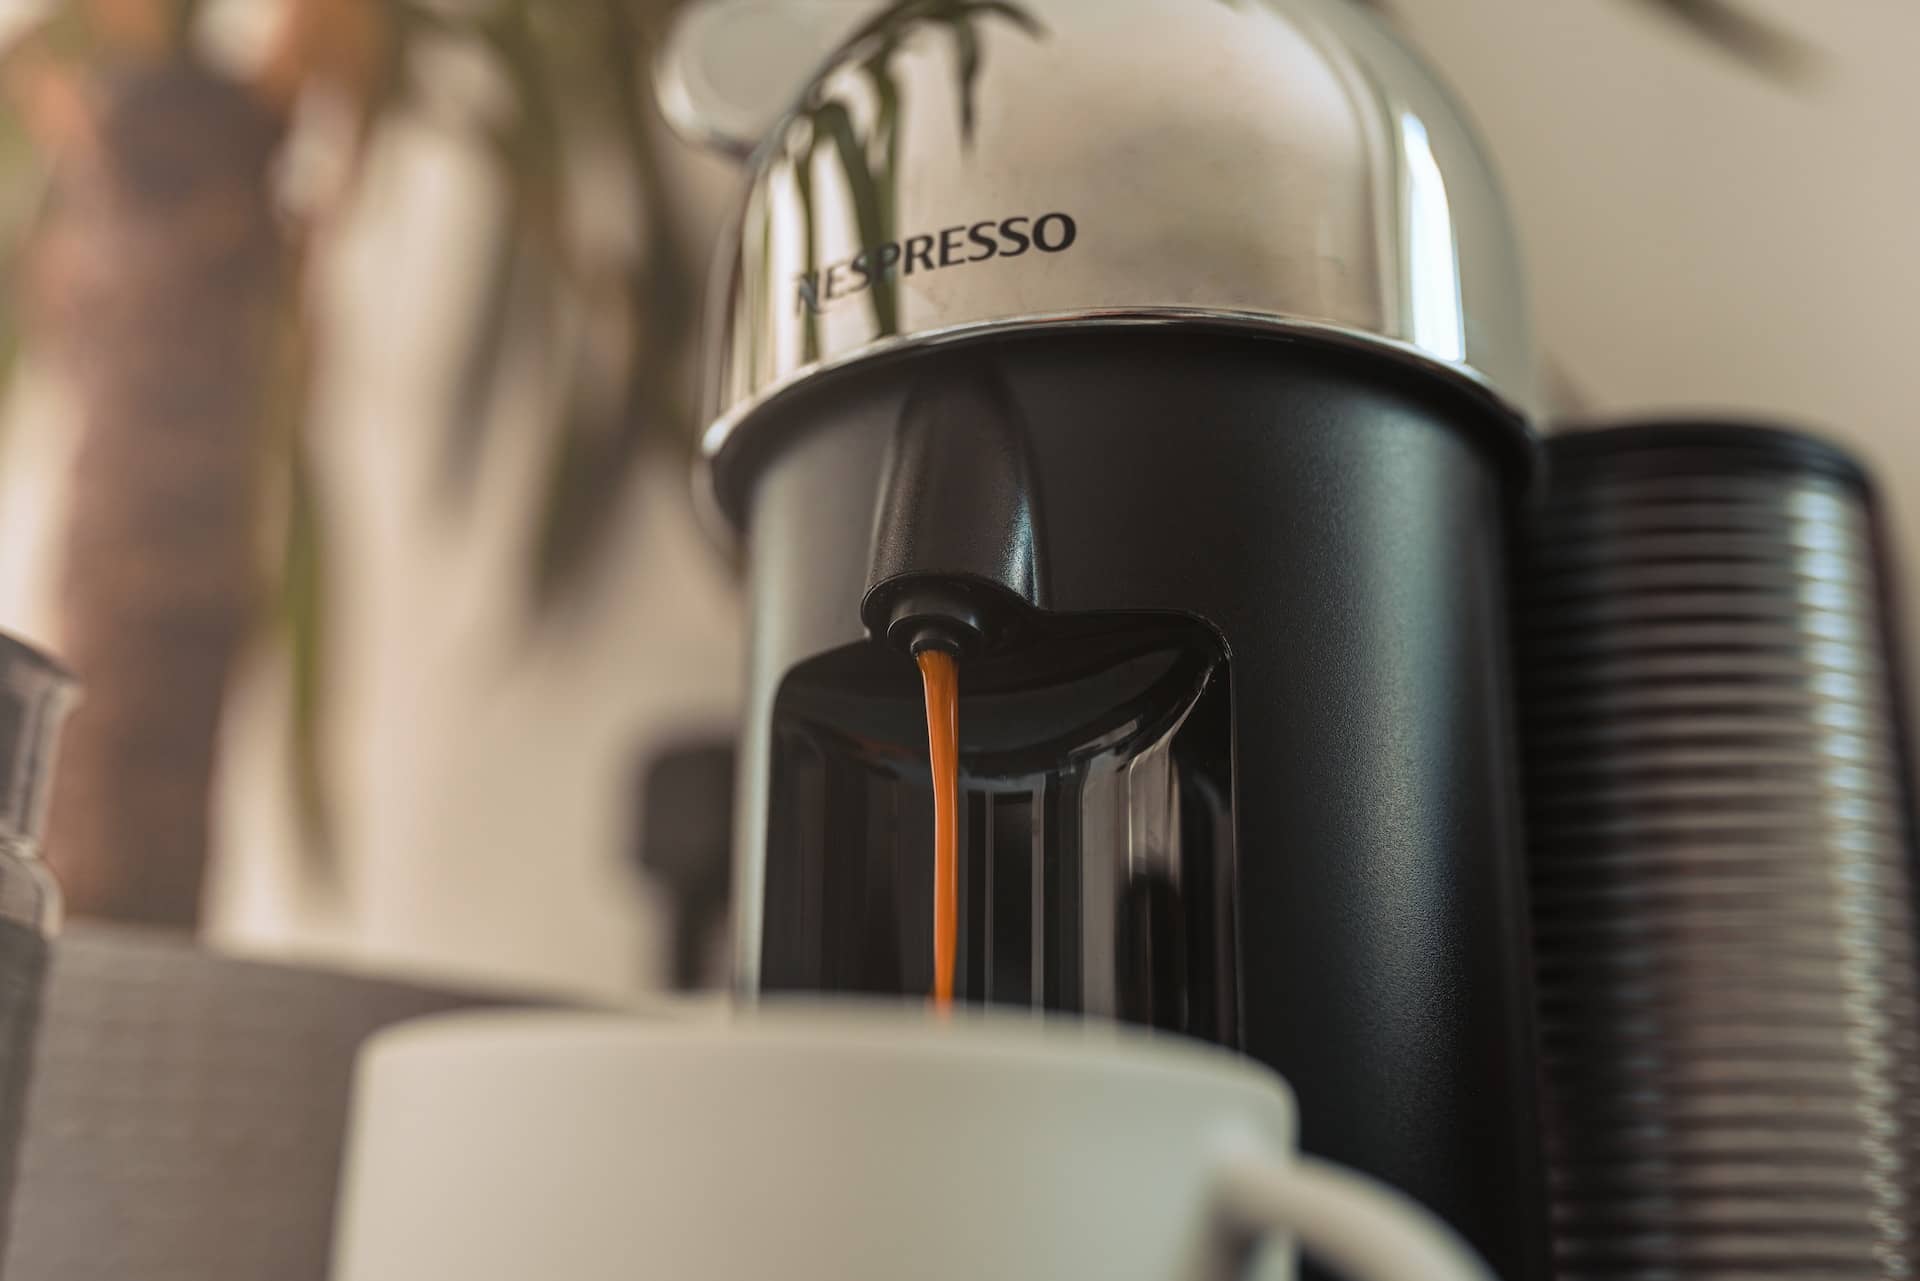 nespresso machine pouring into coffee cup